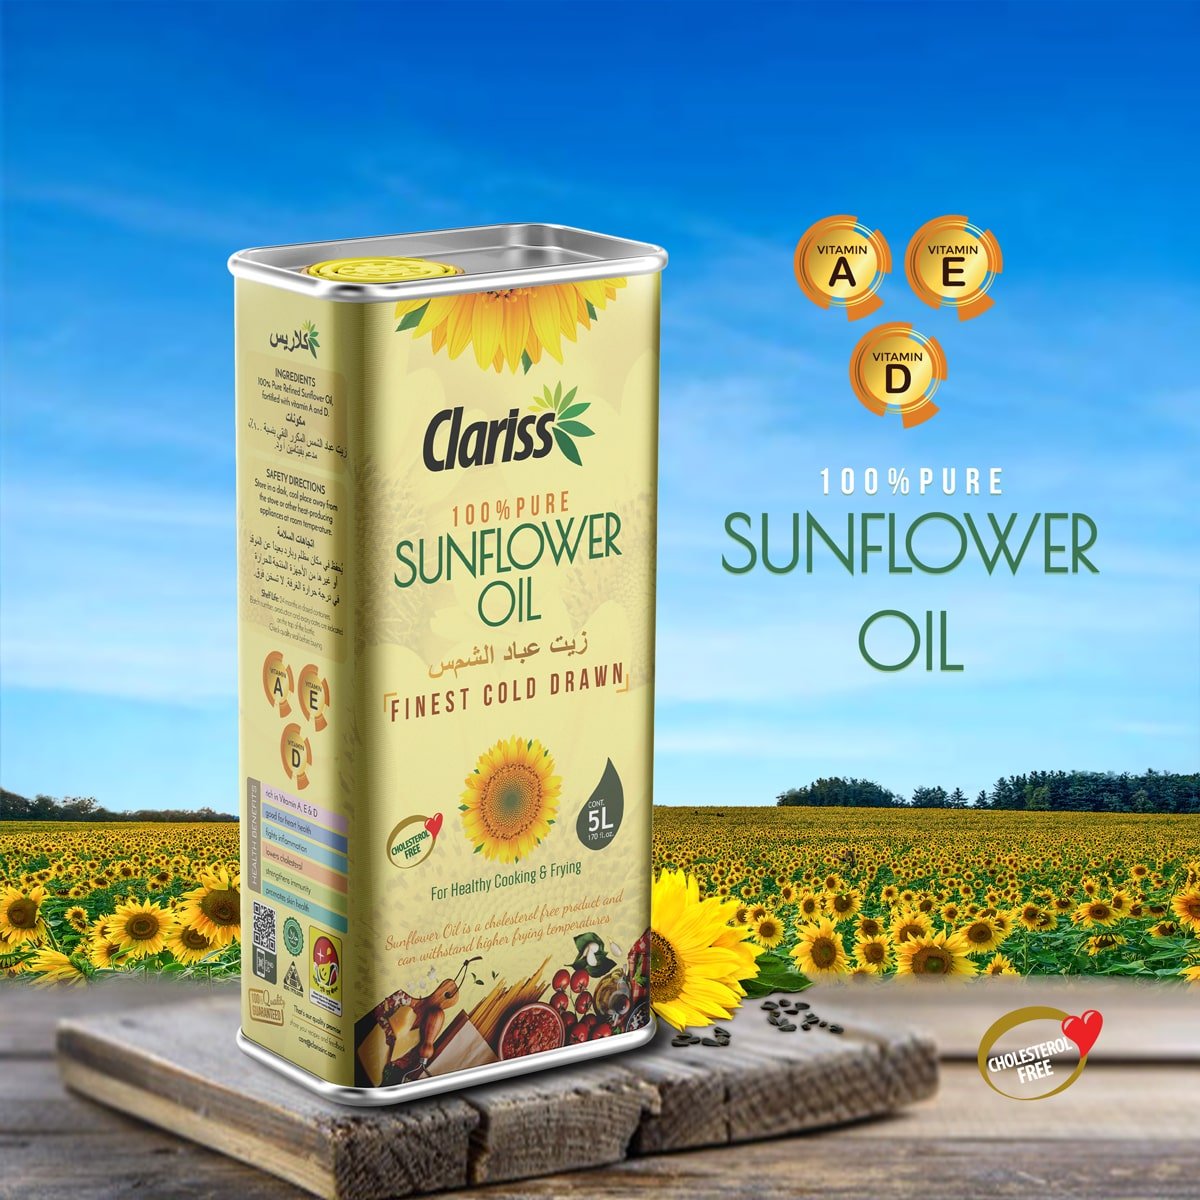 clariss sunflower oil